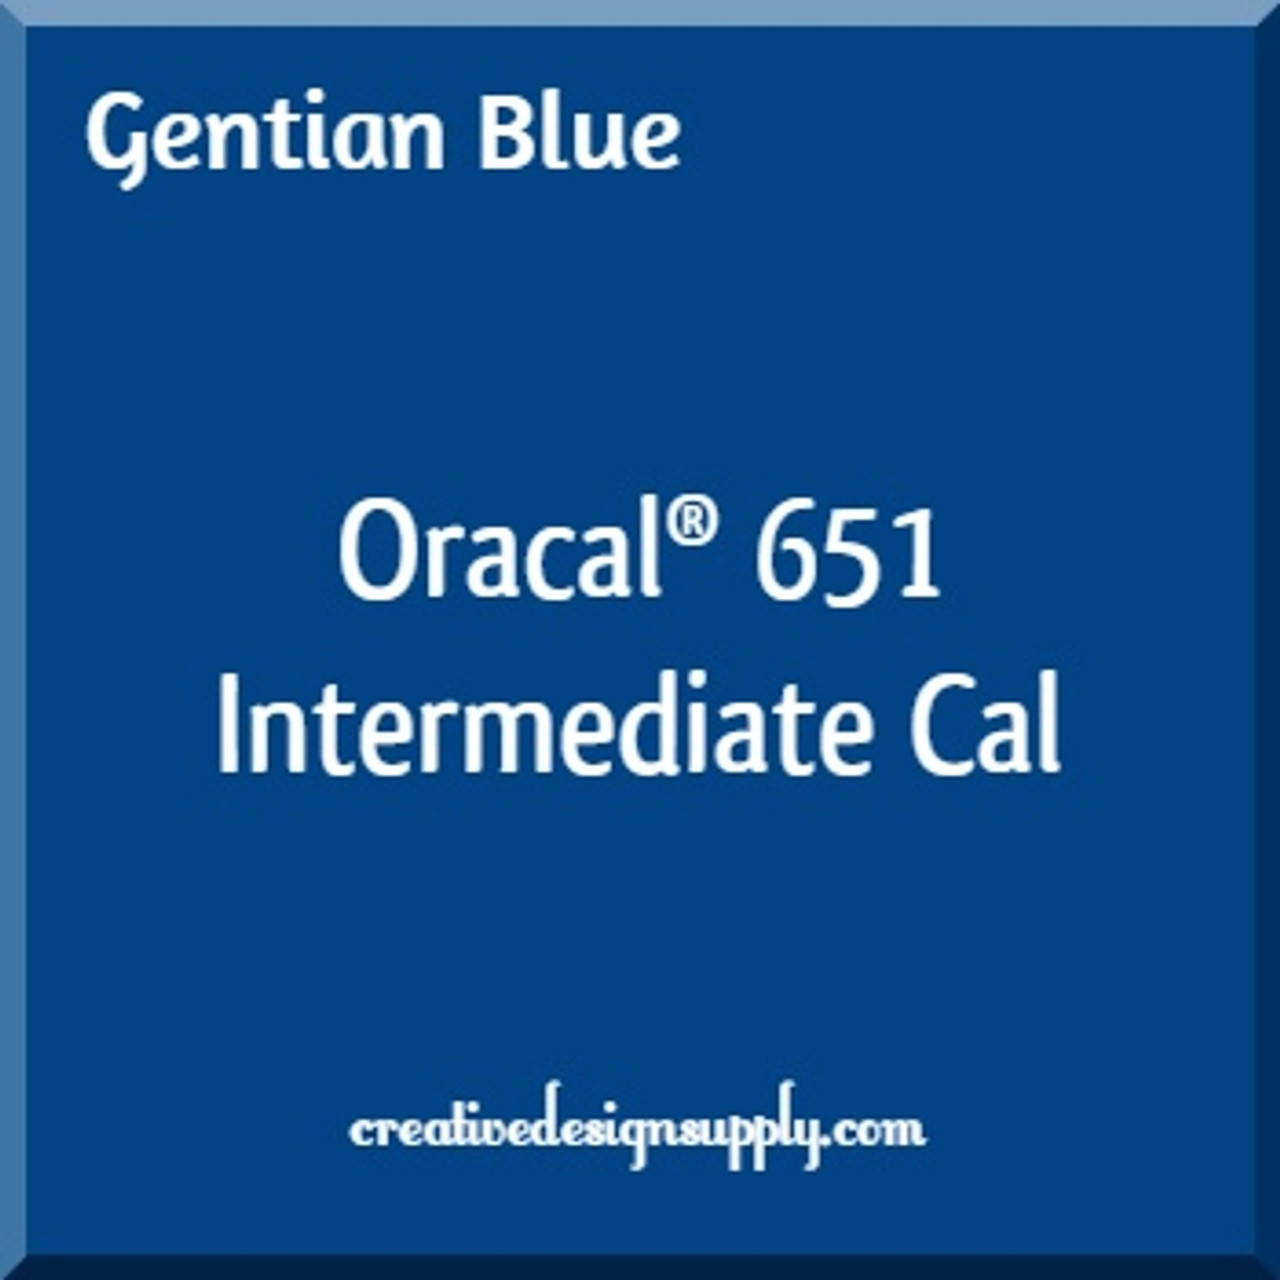 Oracal® 651 Intermediate Cal | Gentian Blue